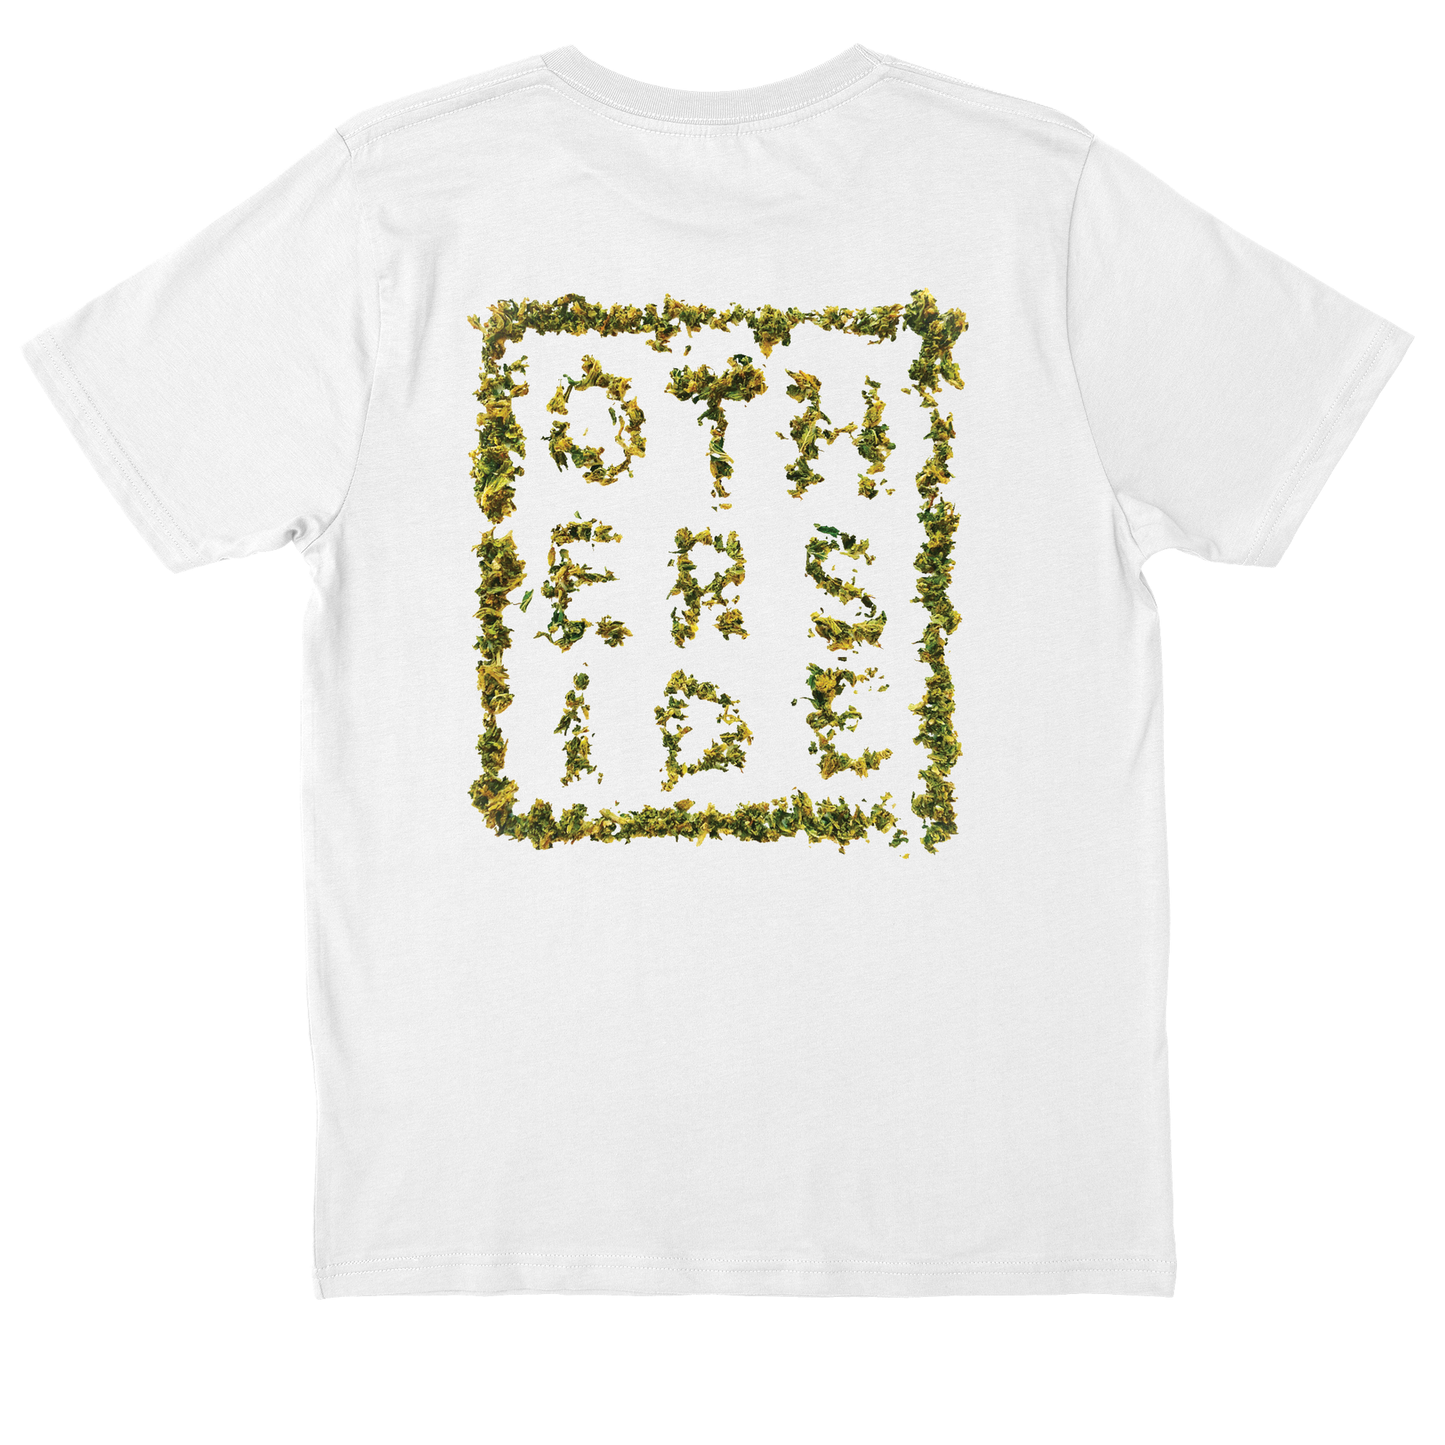 - Otherside - Herbal tee - Organic Light T-Shirt